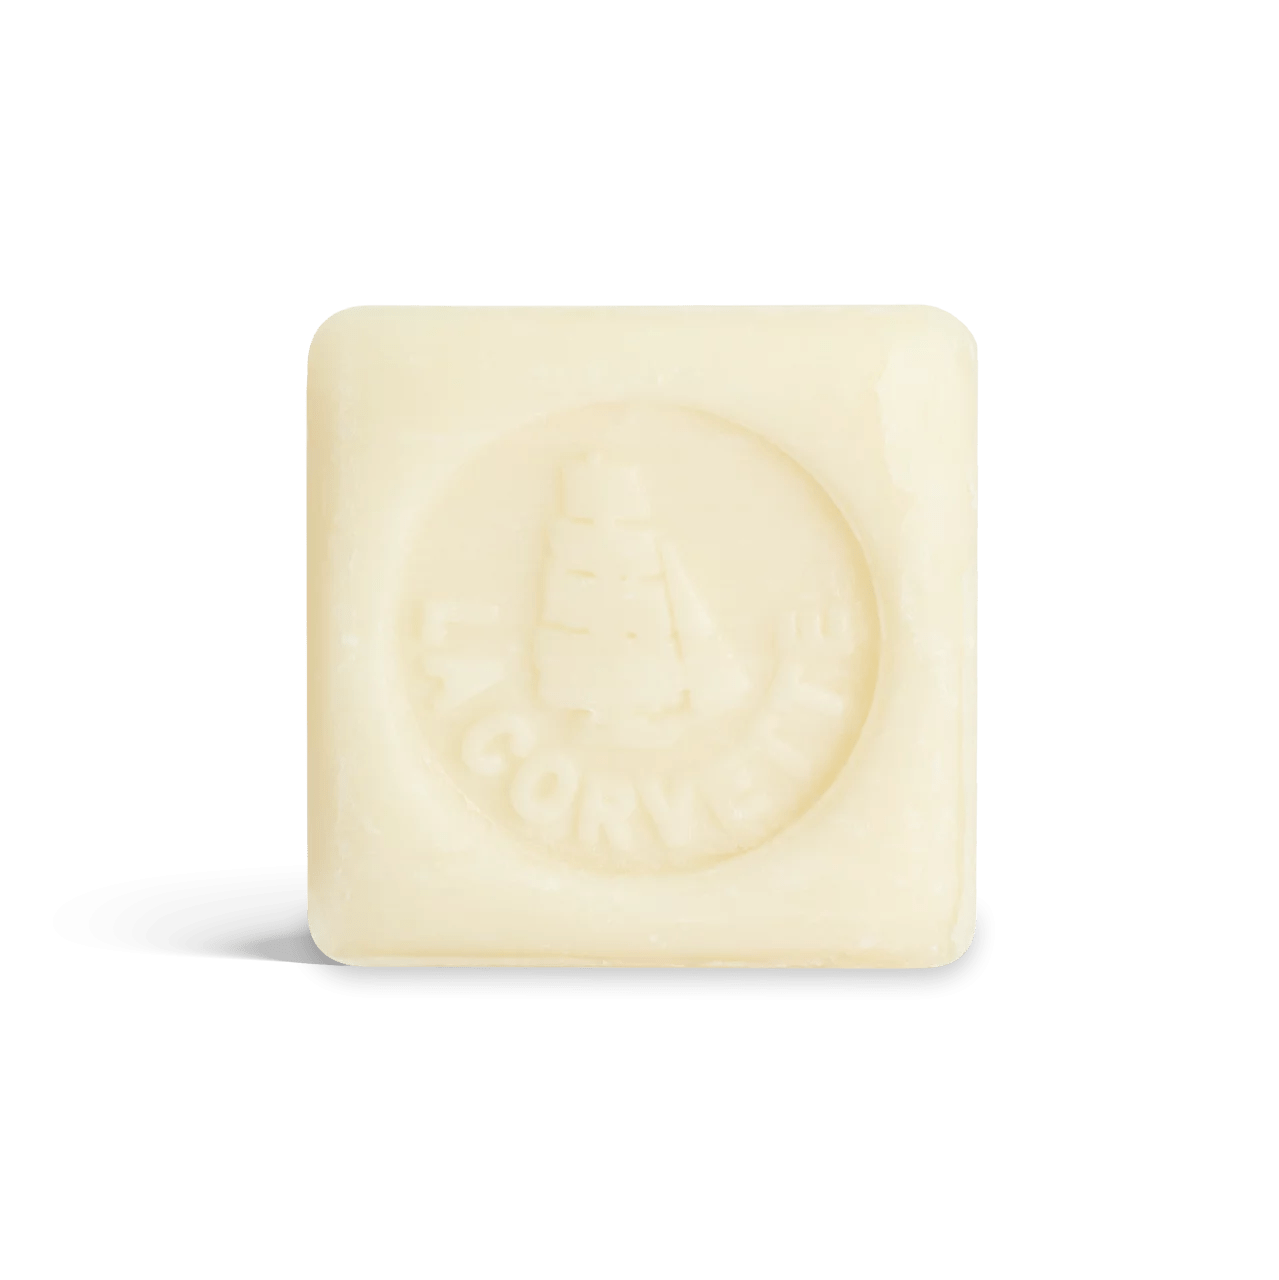 Organic Soap Bar - Sweet Almond - Plastic Free Amsterdam